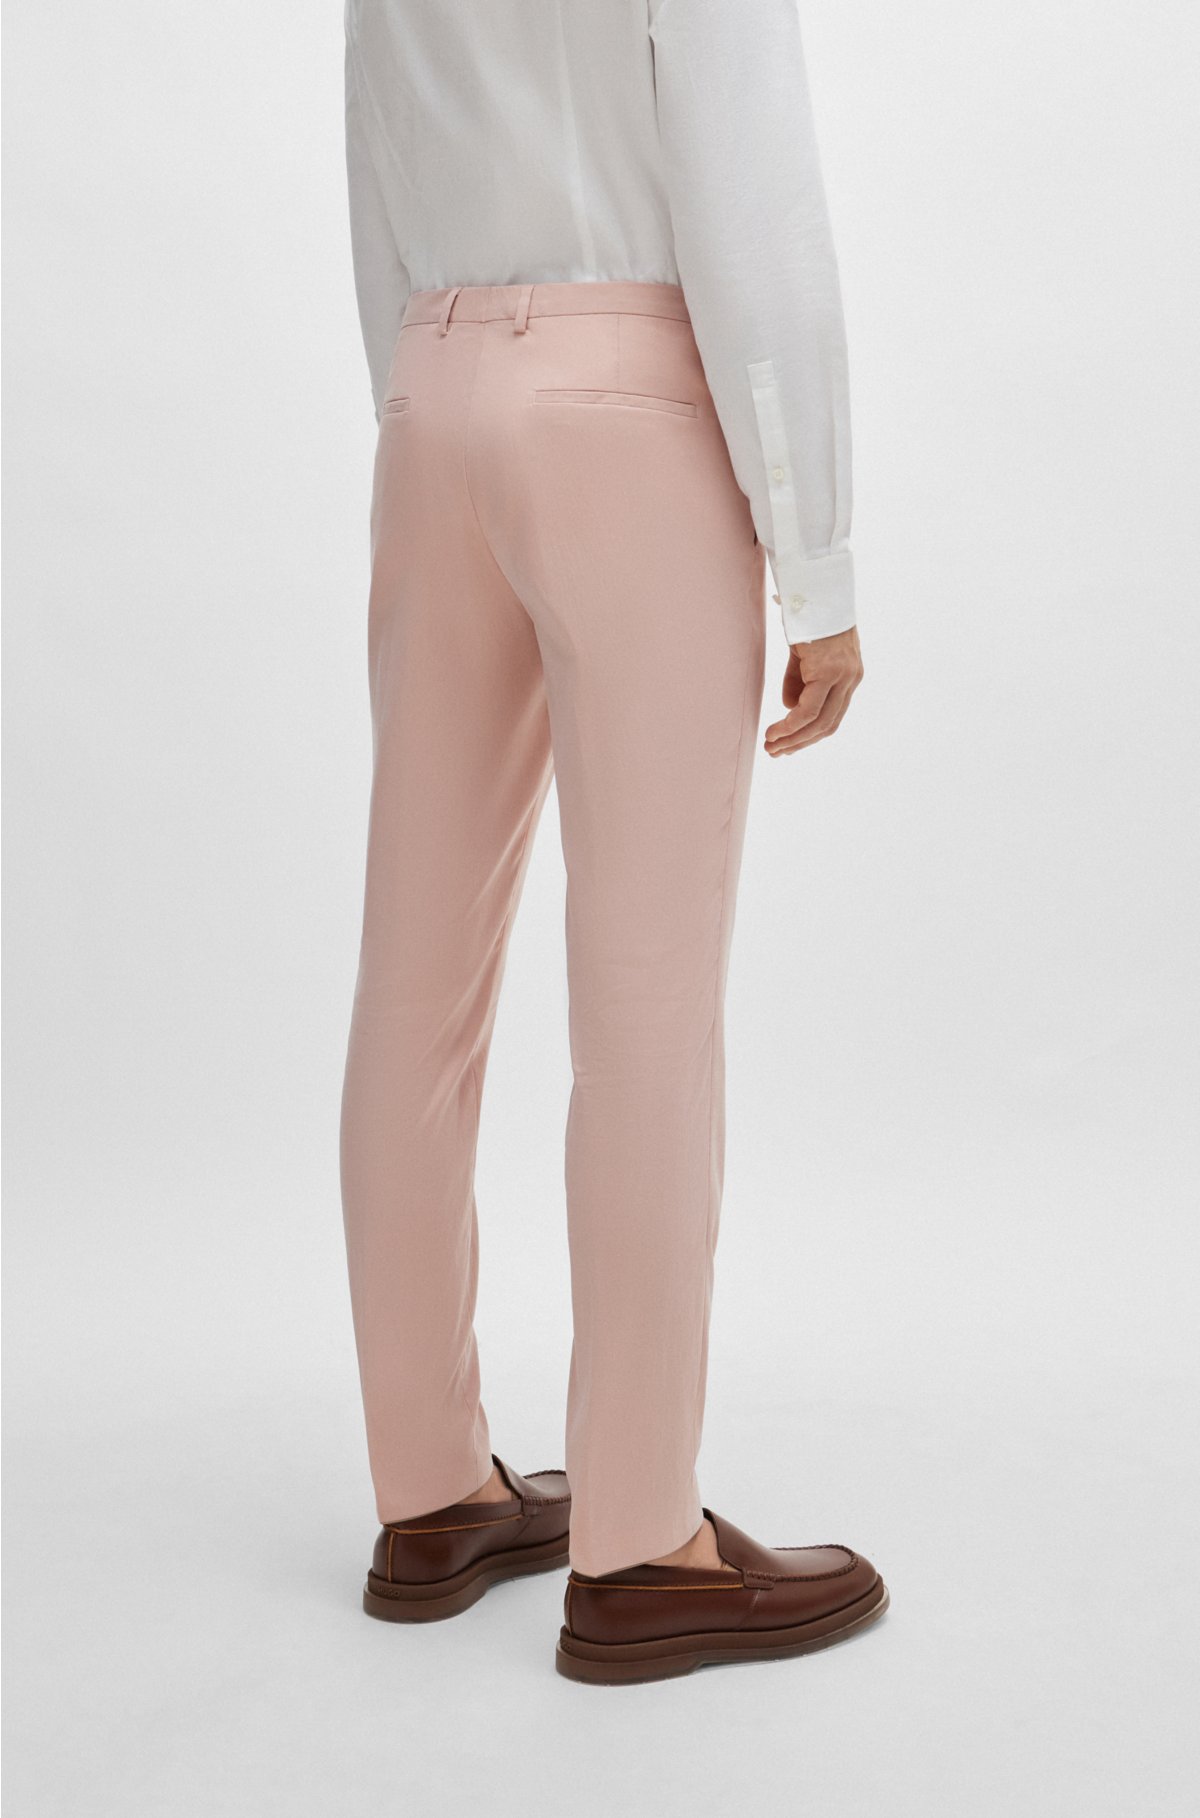 Pink Pants Fabric– Men's Dress Pants Fabrics